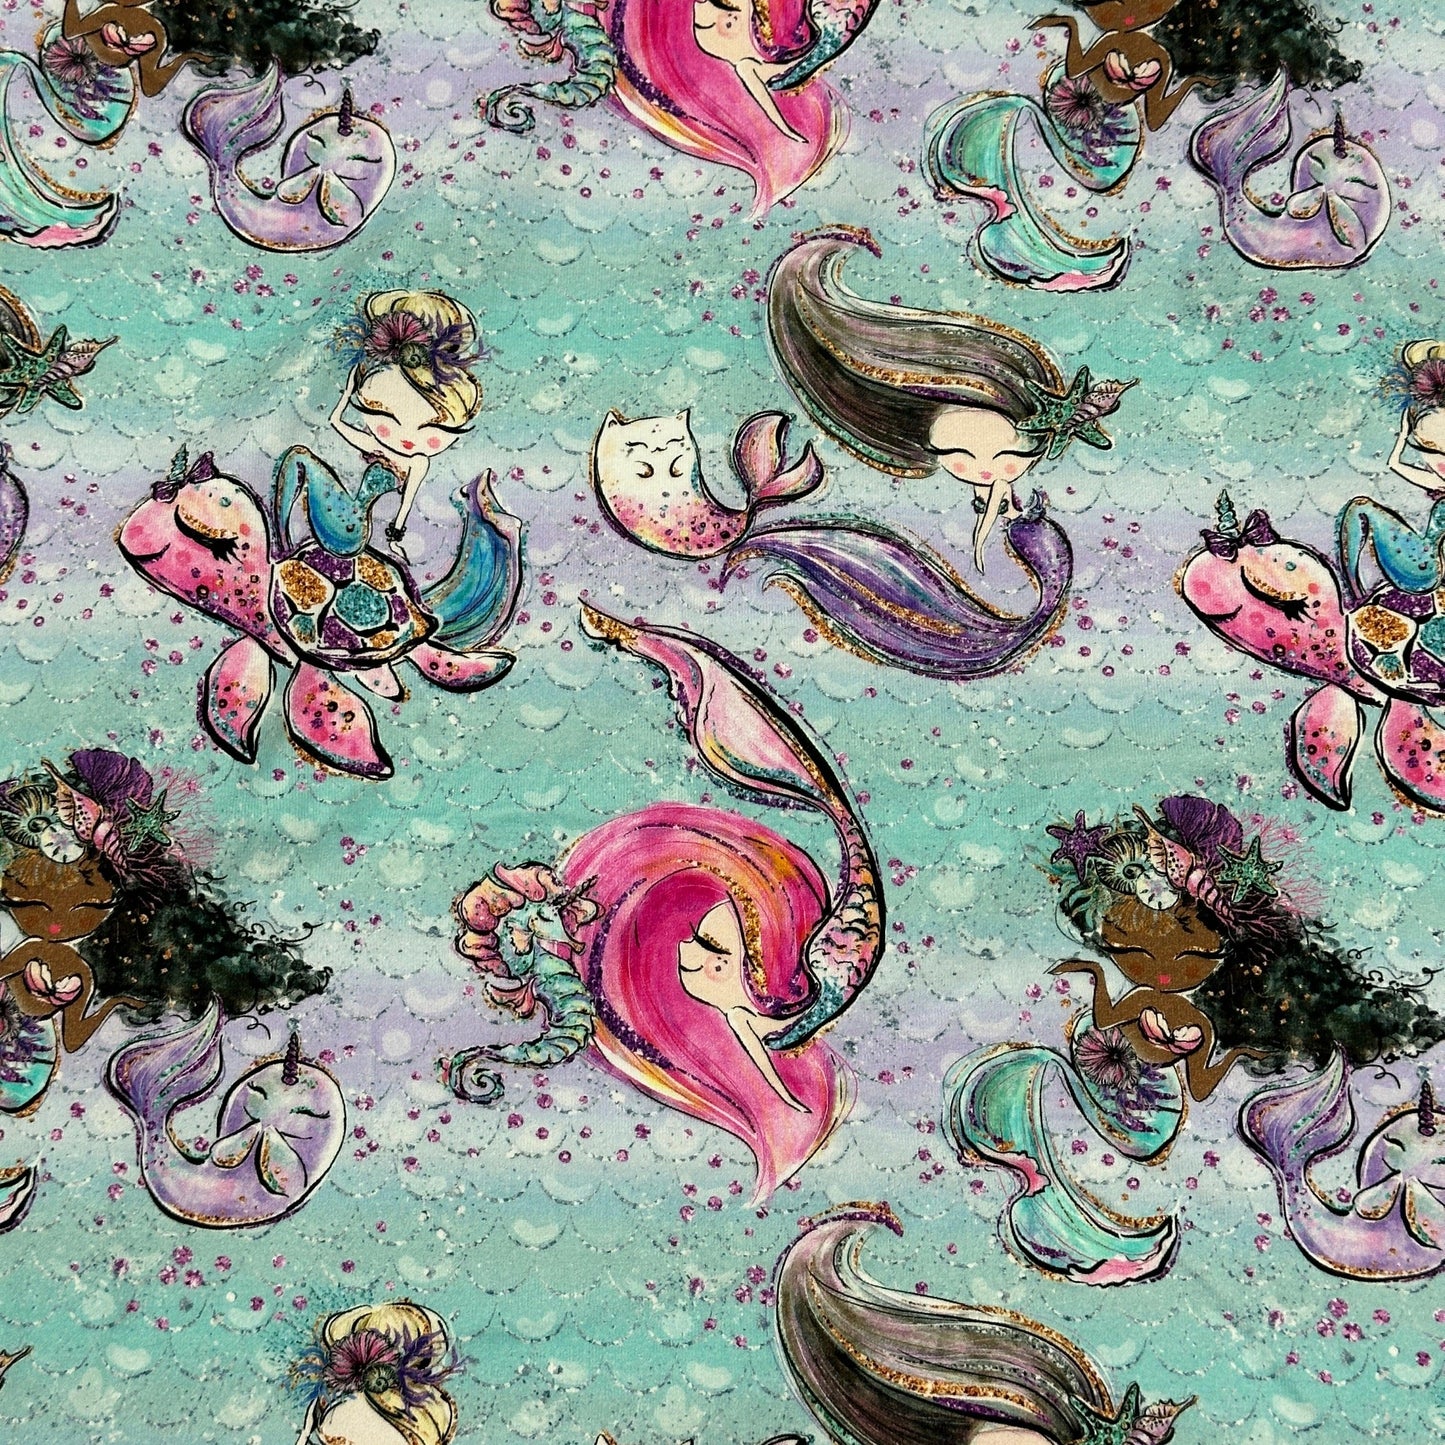 Mermaids on Mint Bamboo/Spandex Jersey Fabric - Nature's Fabrics